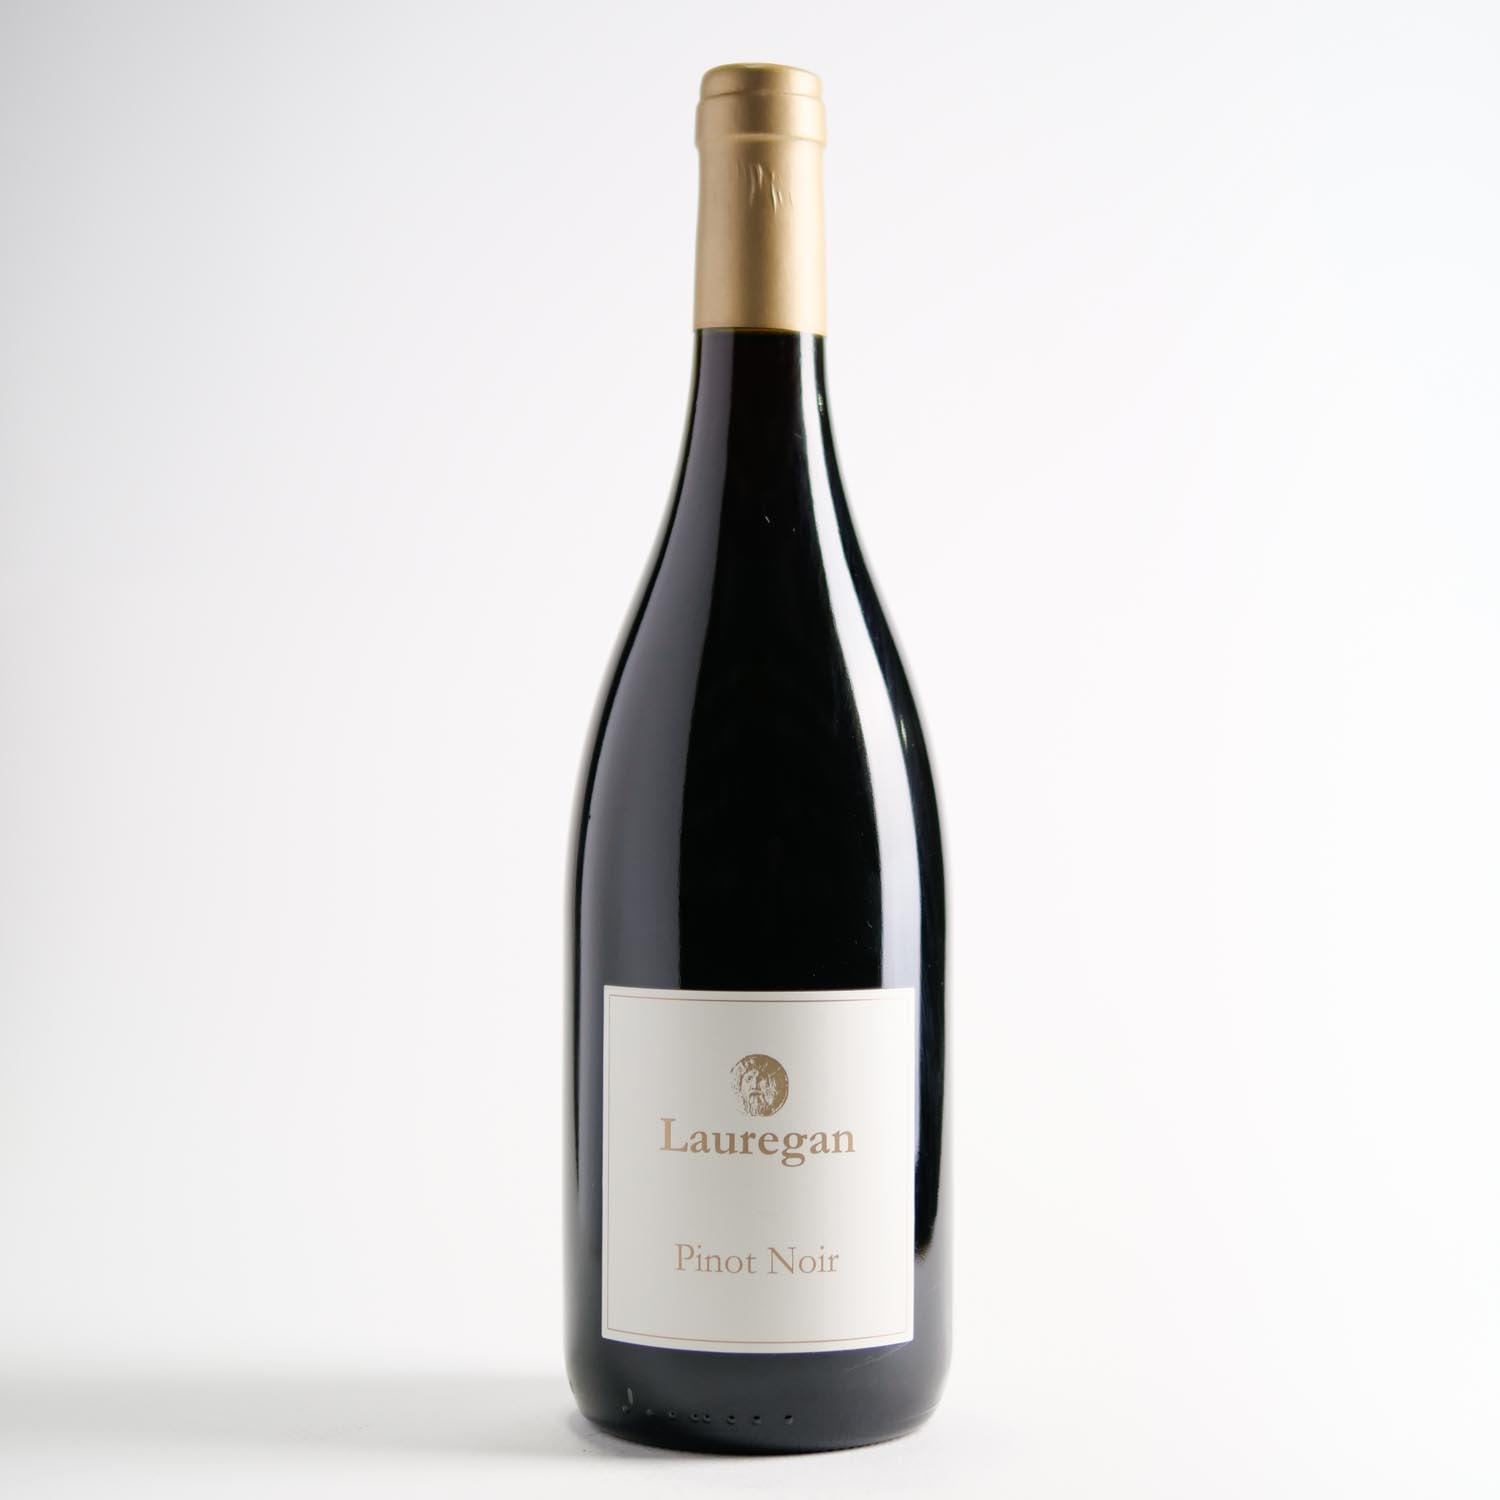 Lauregan Single Vineyard Pinot Noir 2014